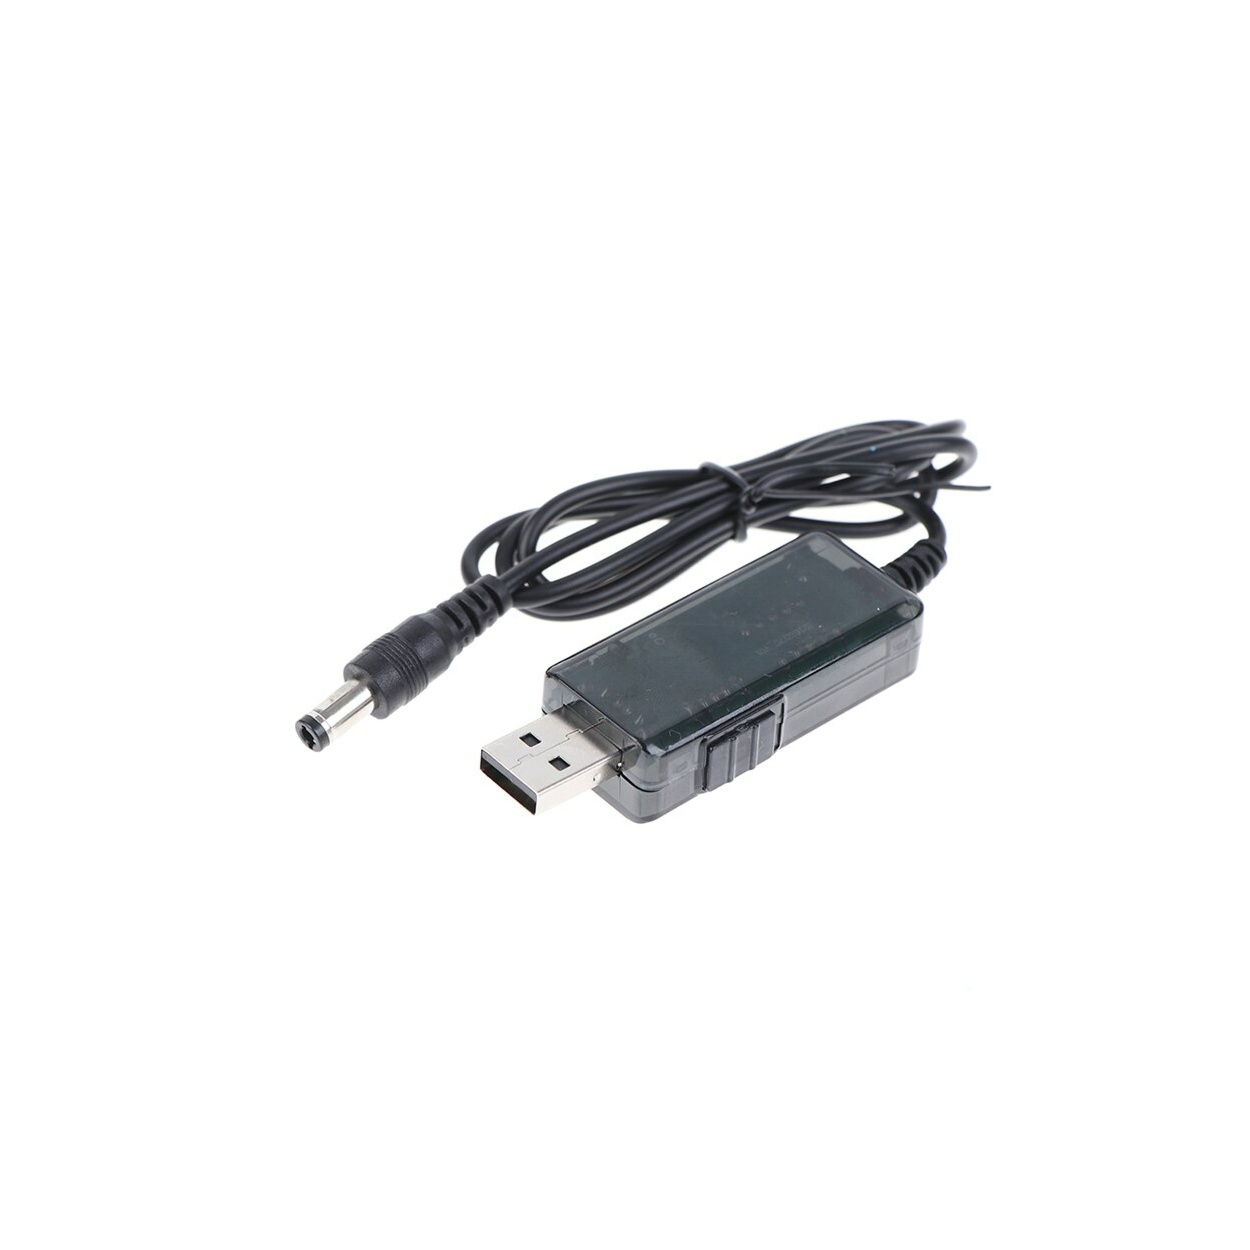 USB 5v to DC 12v - Step Up Converter Cable 